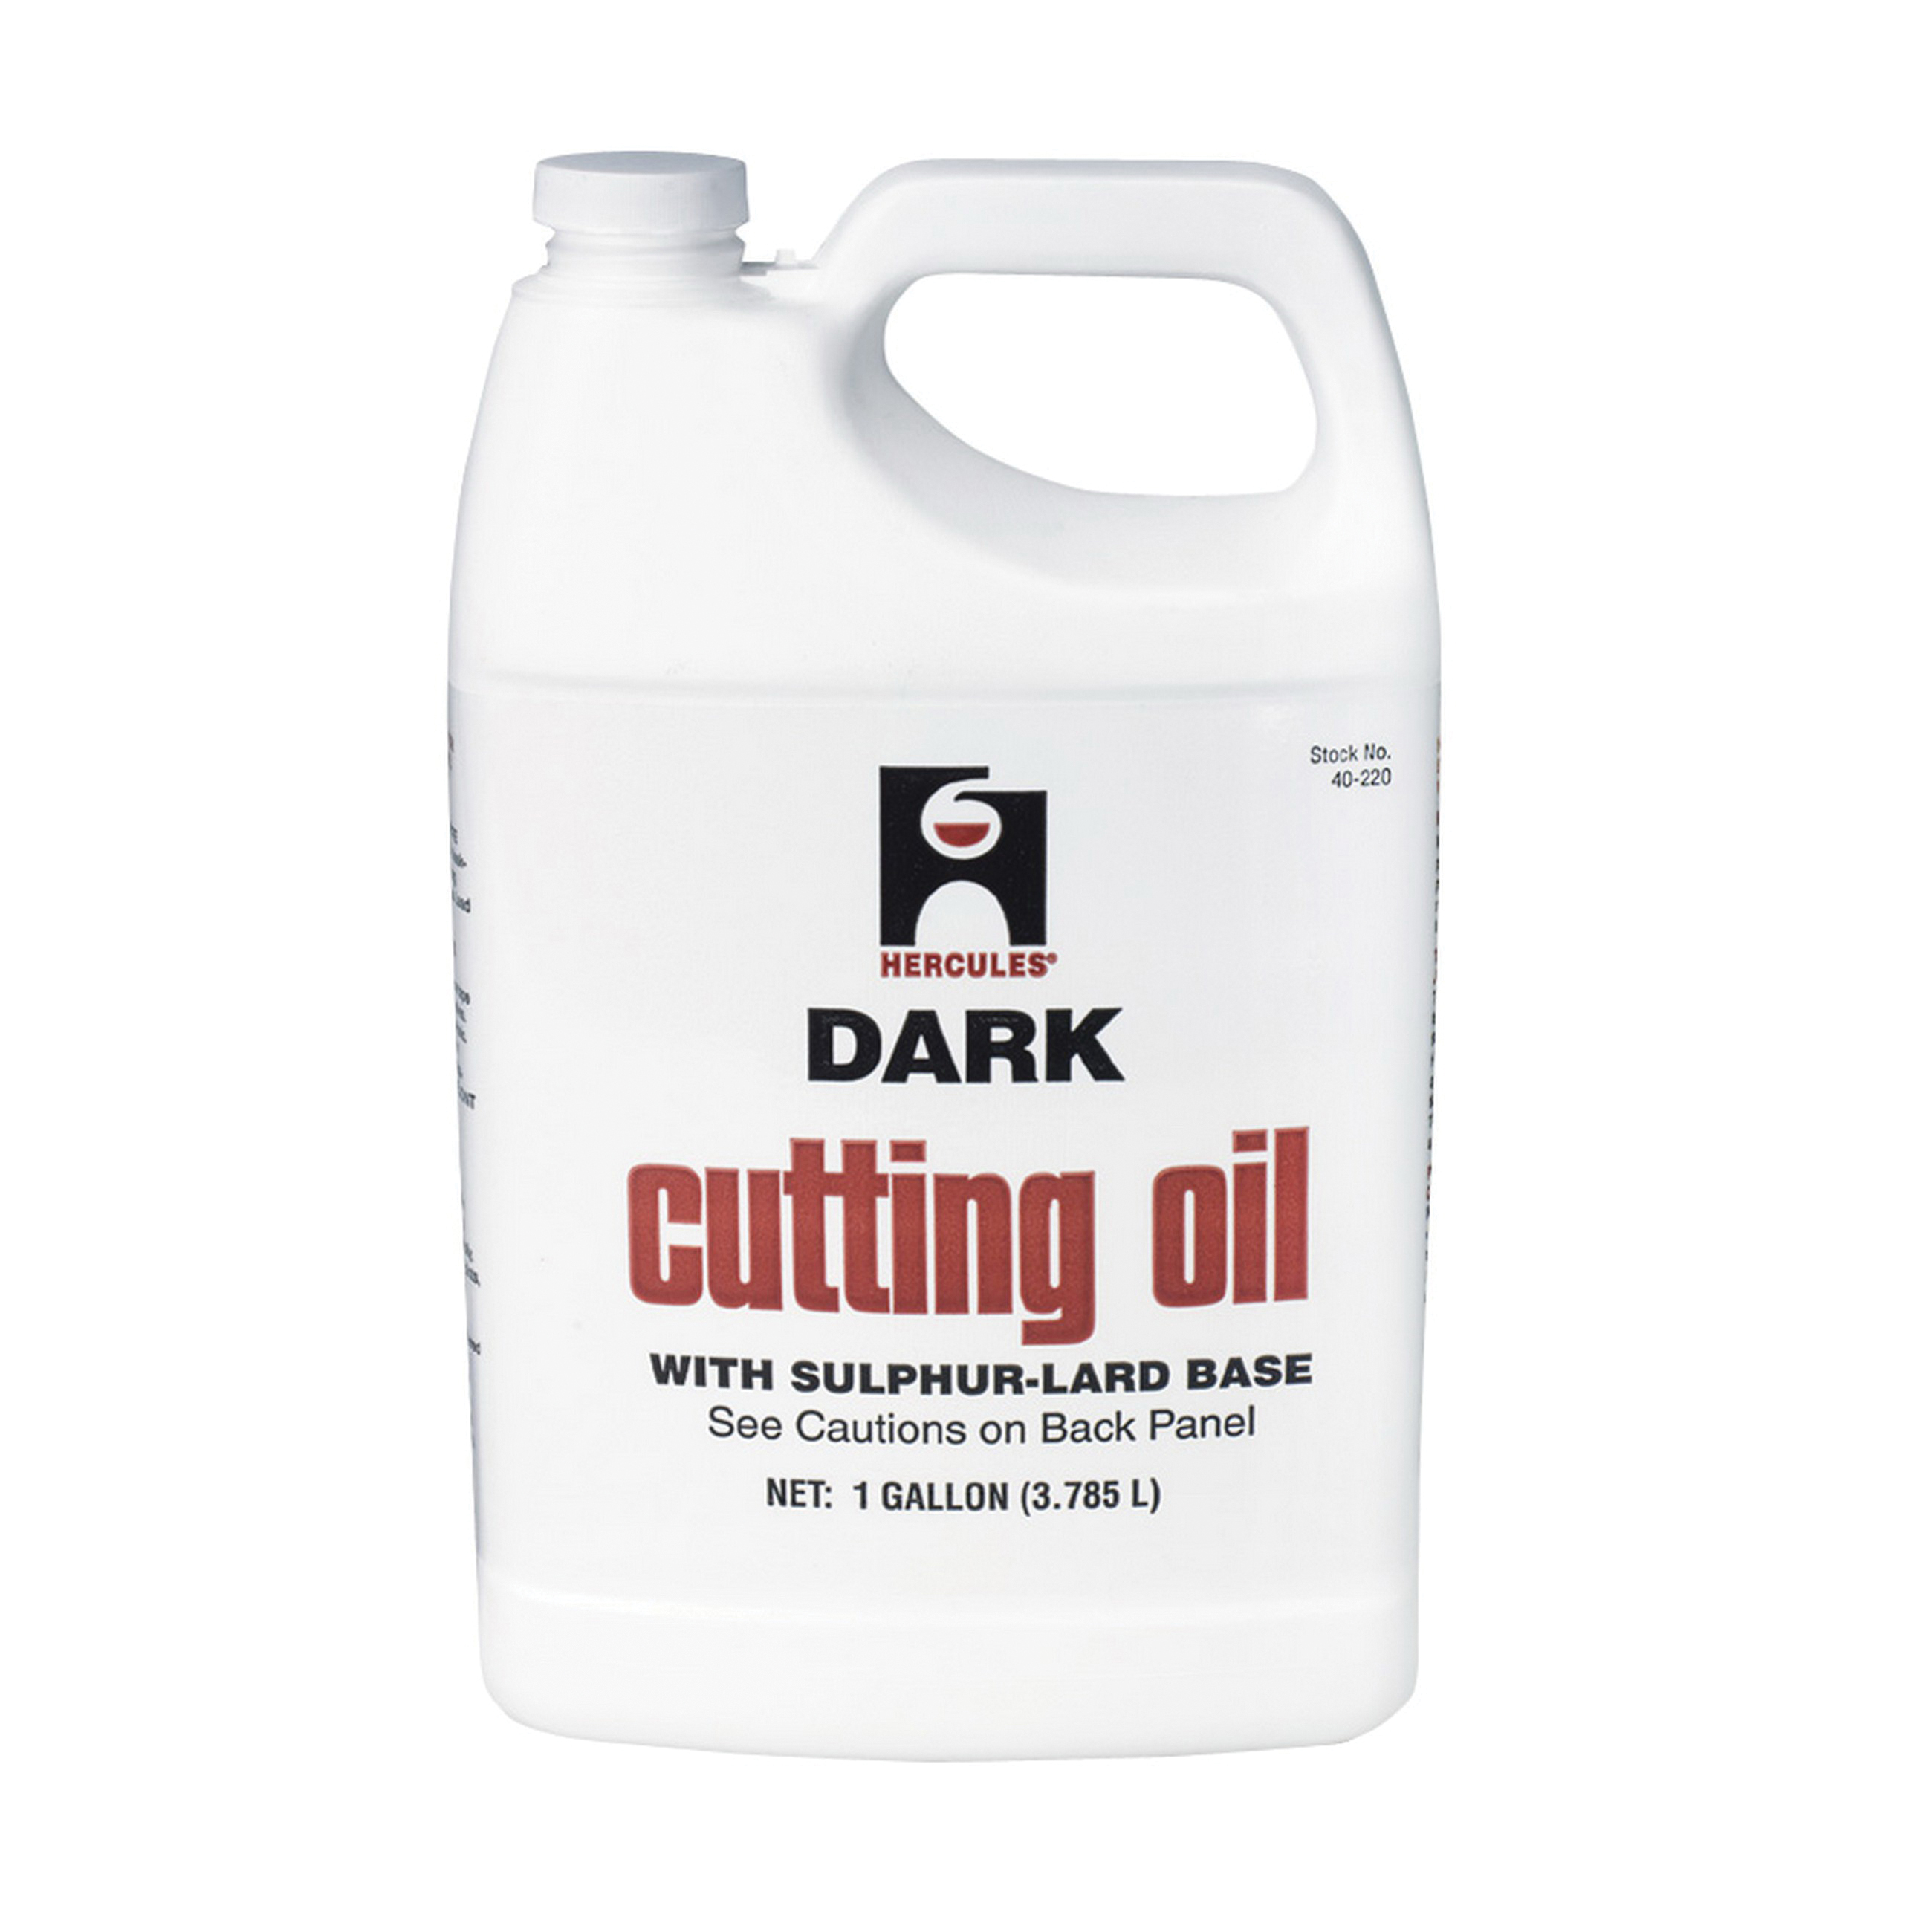 Hercules® 40220 Cutting Oil, 1 gal, Amber Liquid, Dark Brownish, Petroleum